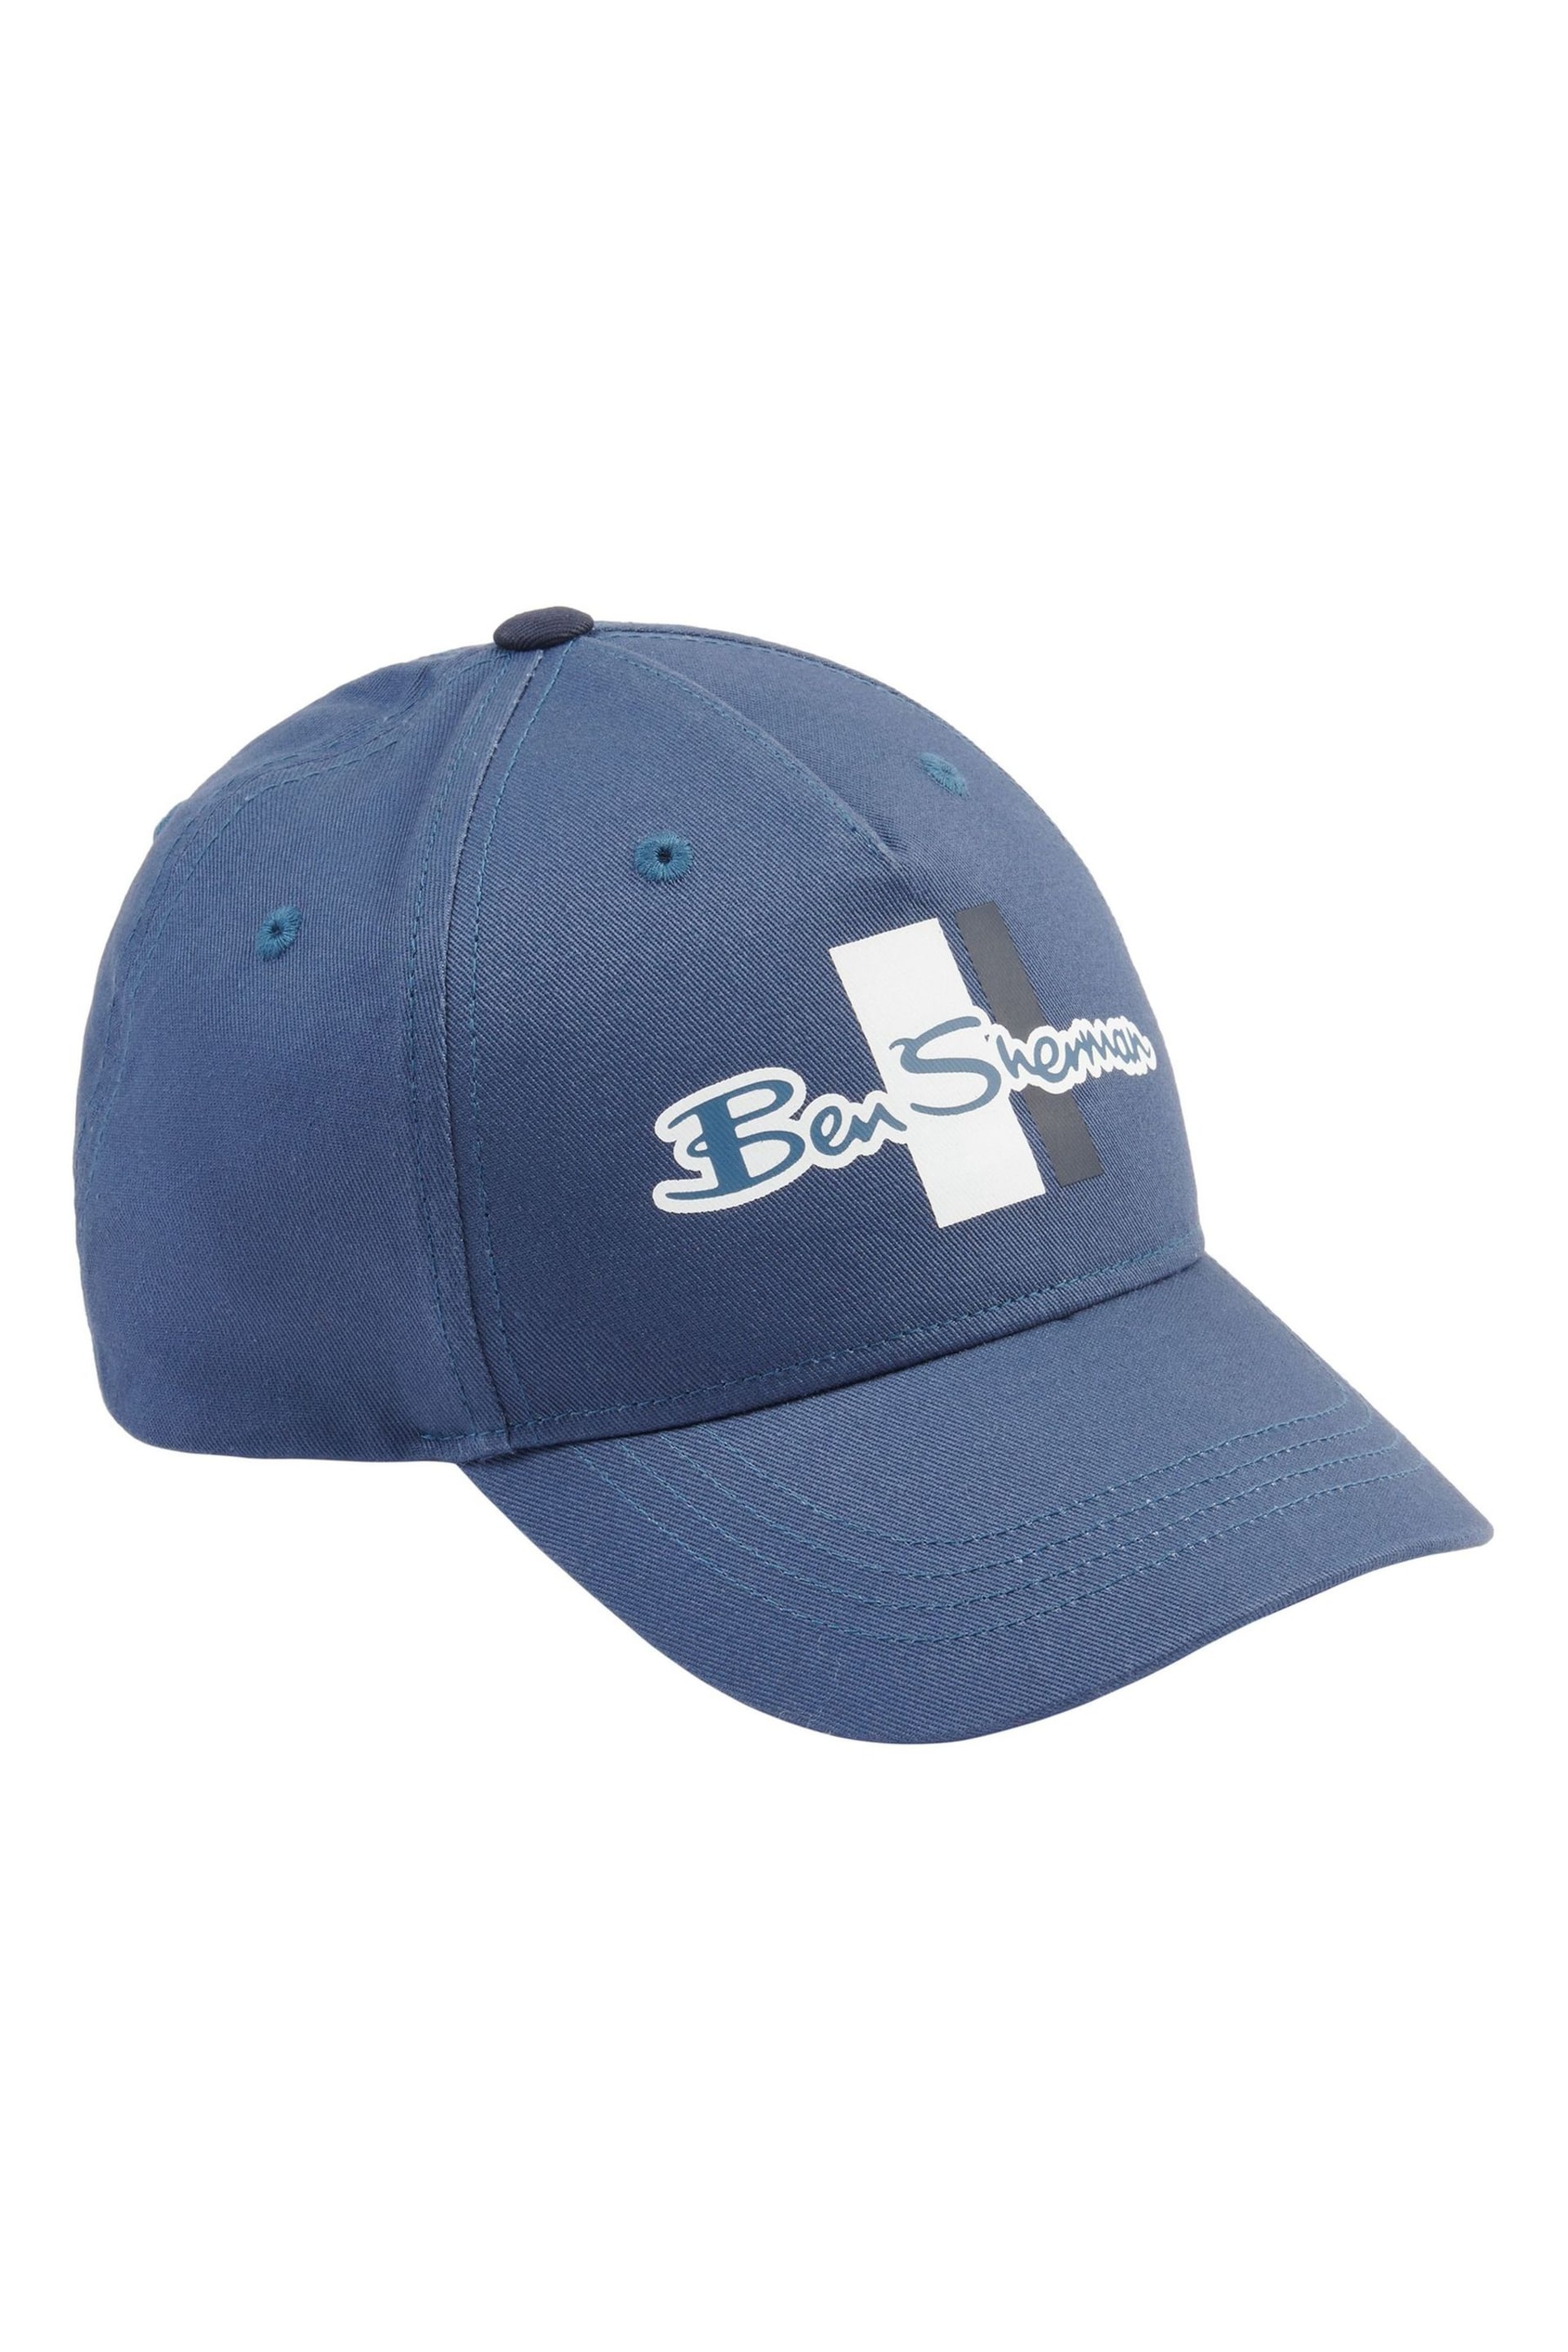 Ben Sherman Blue Mod Script Baseball Cap - Image 1 of 3